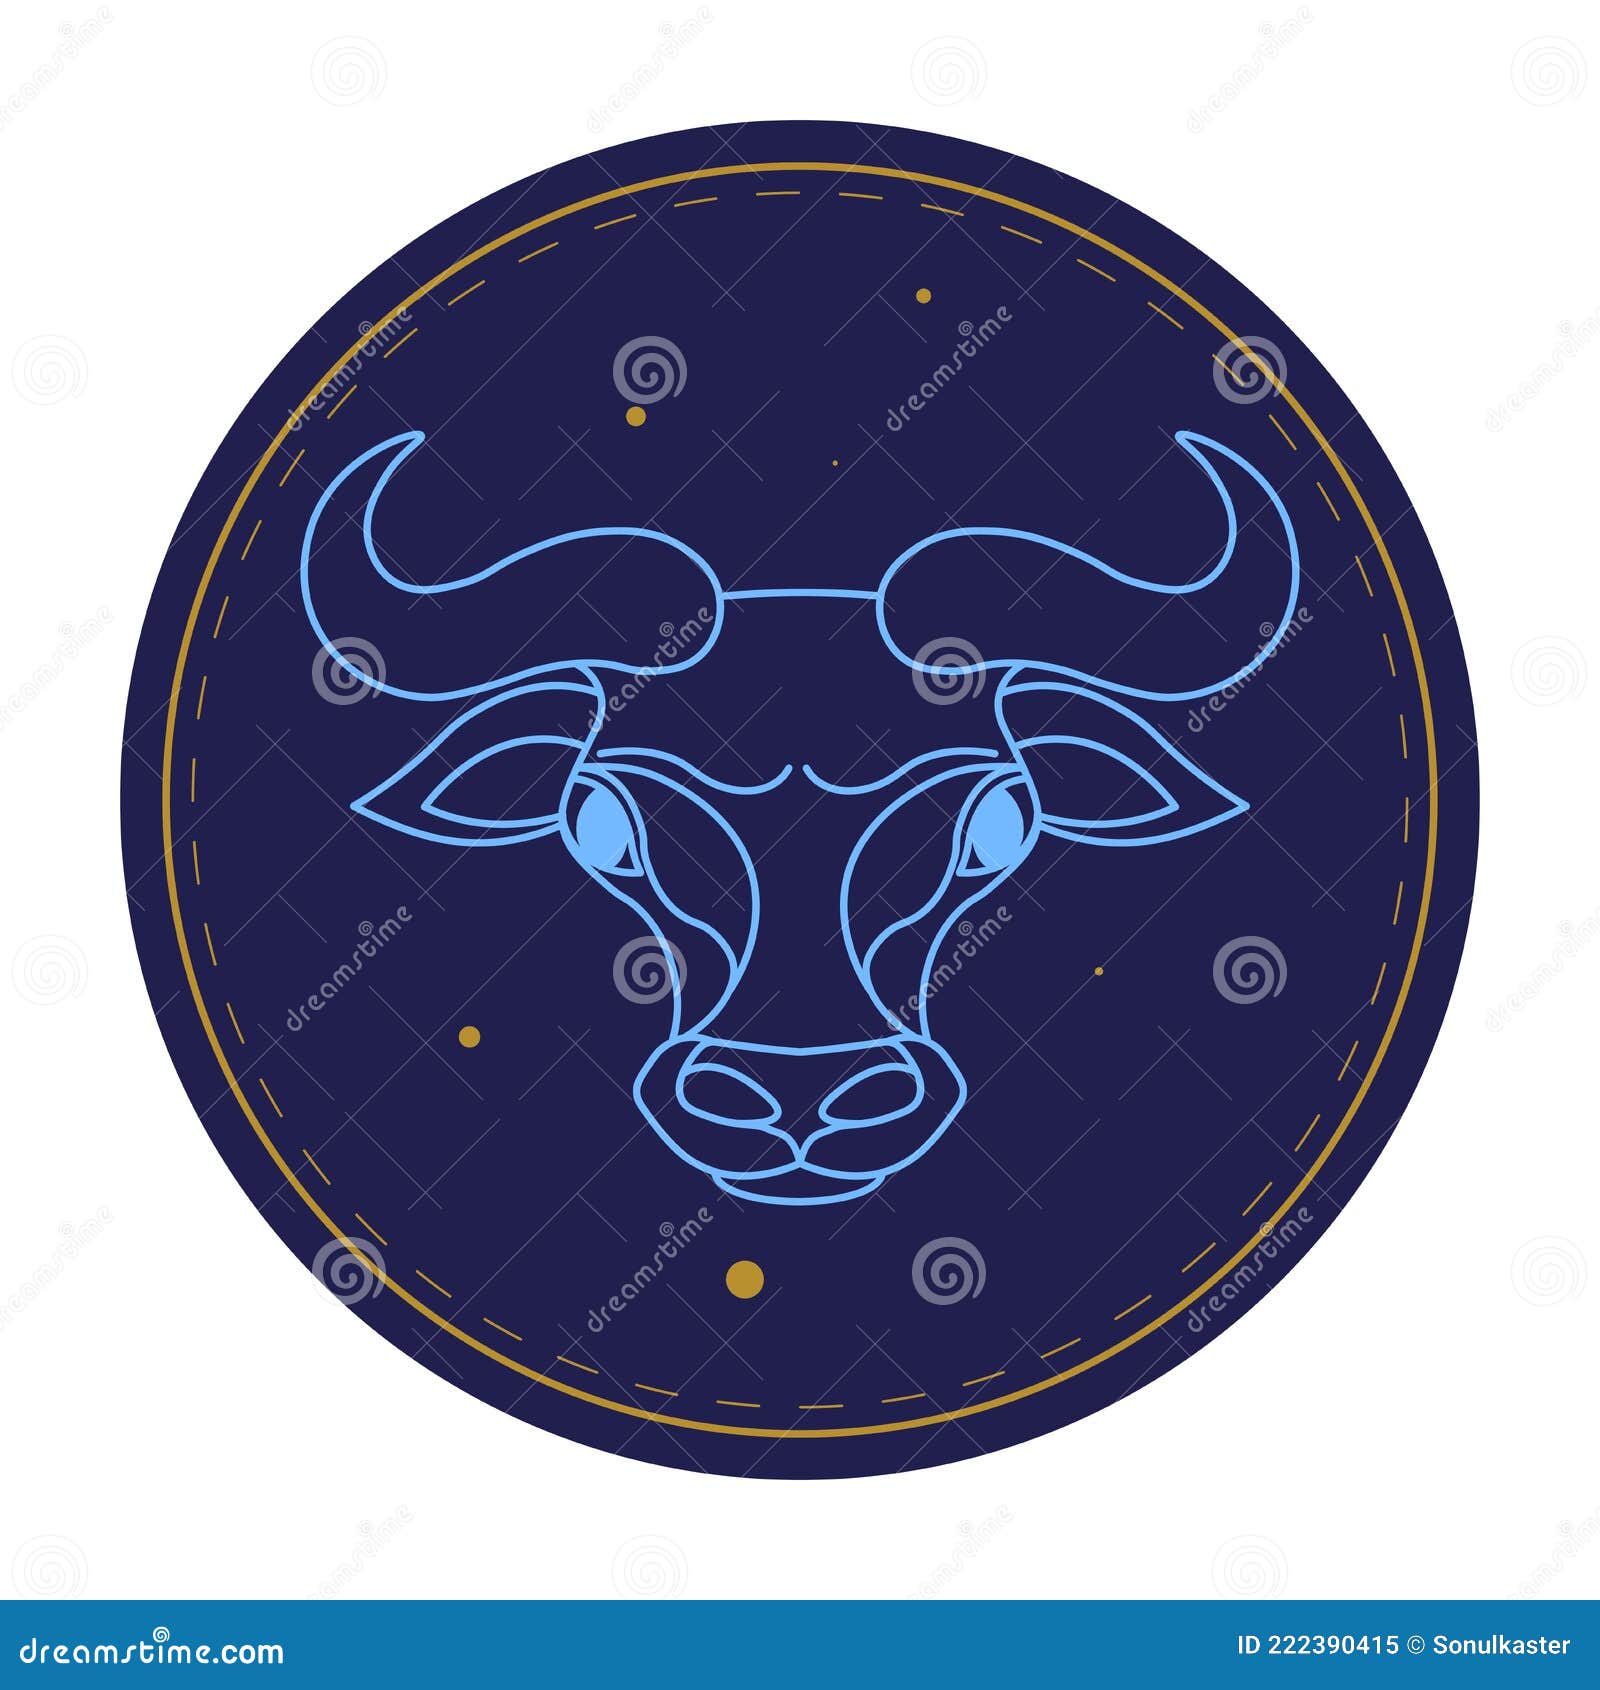 Taurus Astrological Sign, Horoscope Symbol of Bull Stock Vector ...